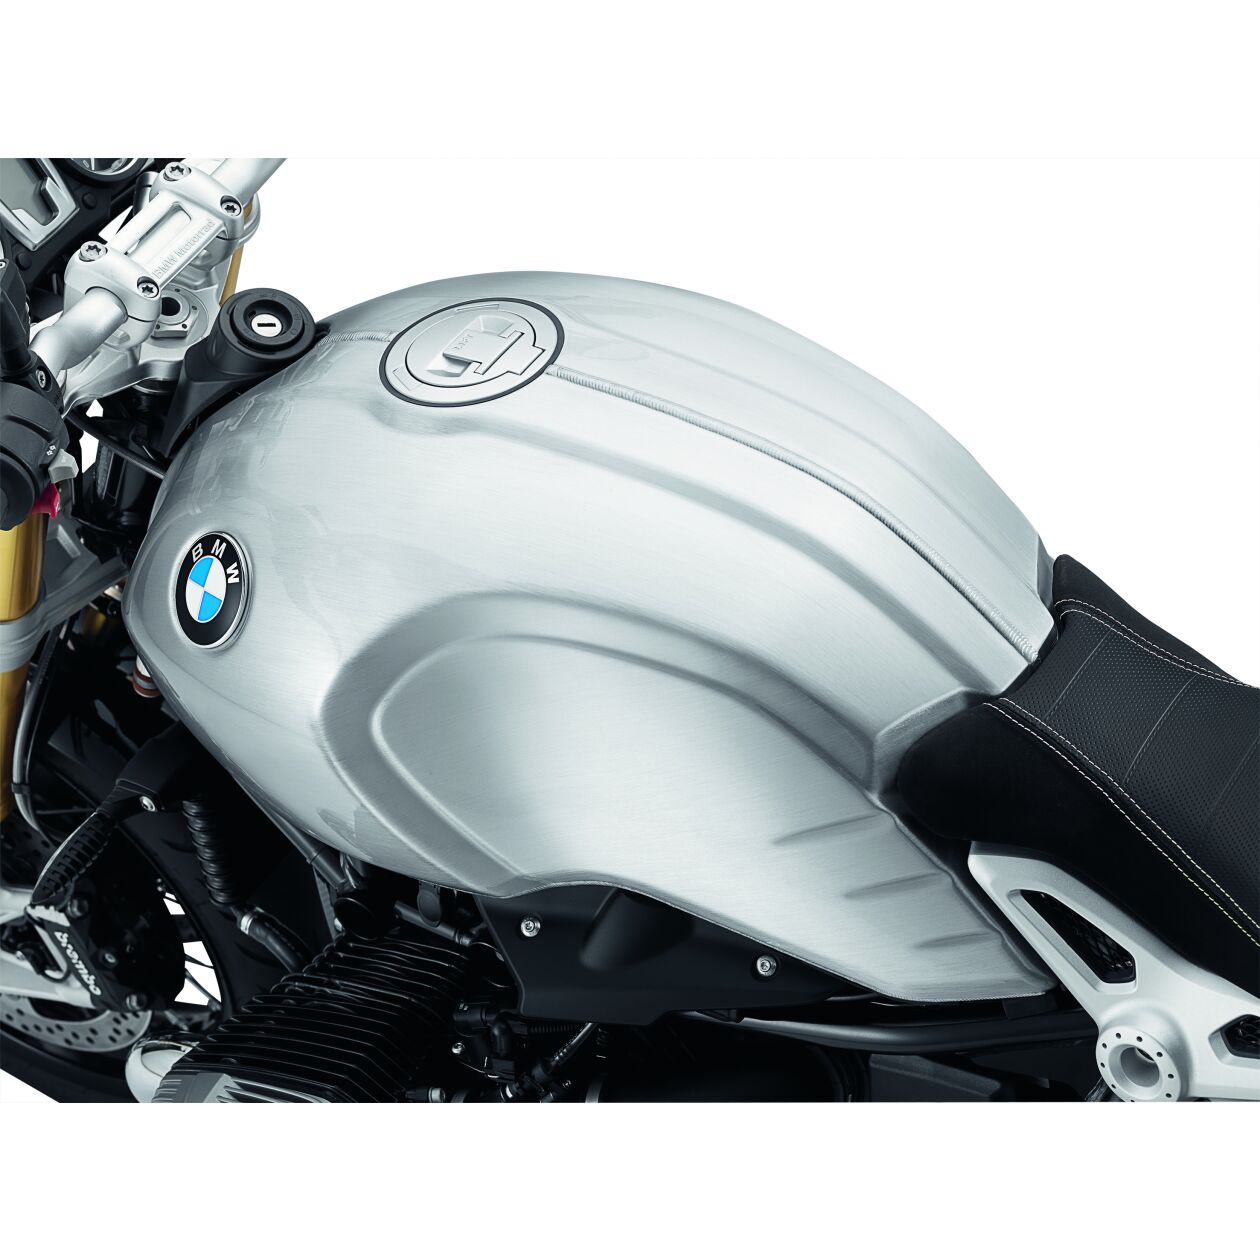 BMW Option 719 Handbrushed Aluminum Fuel Tank - Visible Weld Seam (16118565075)